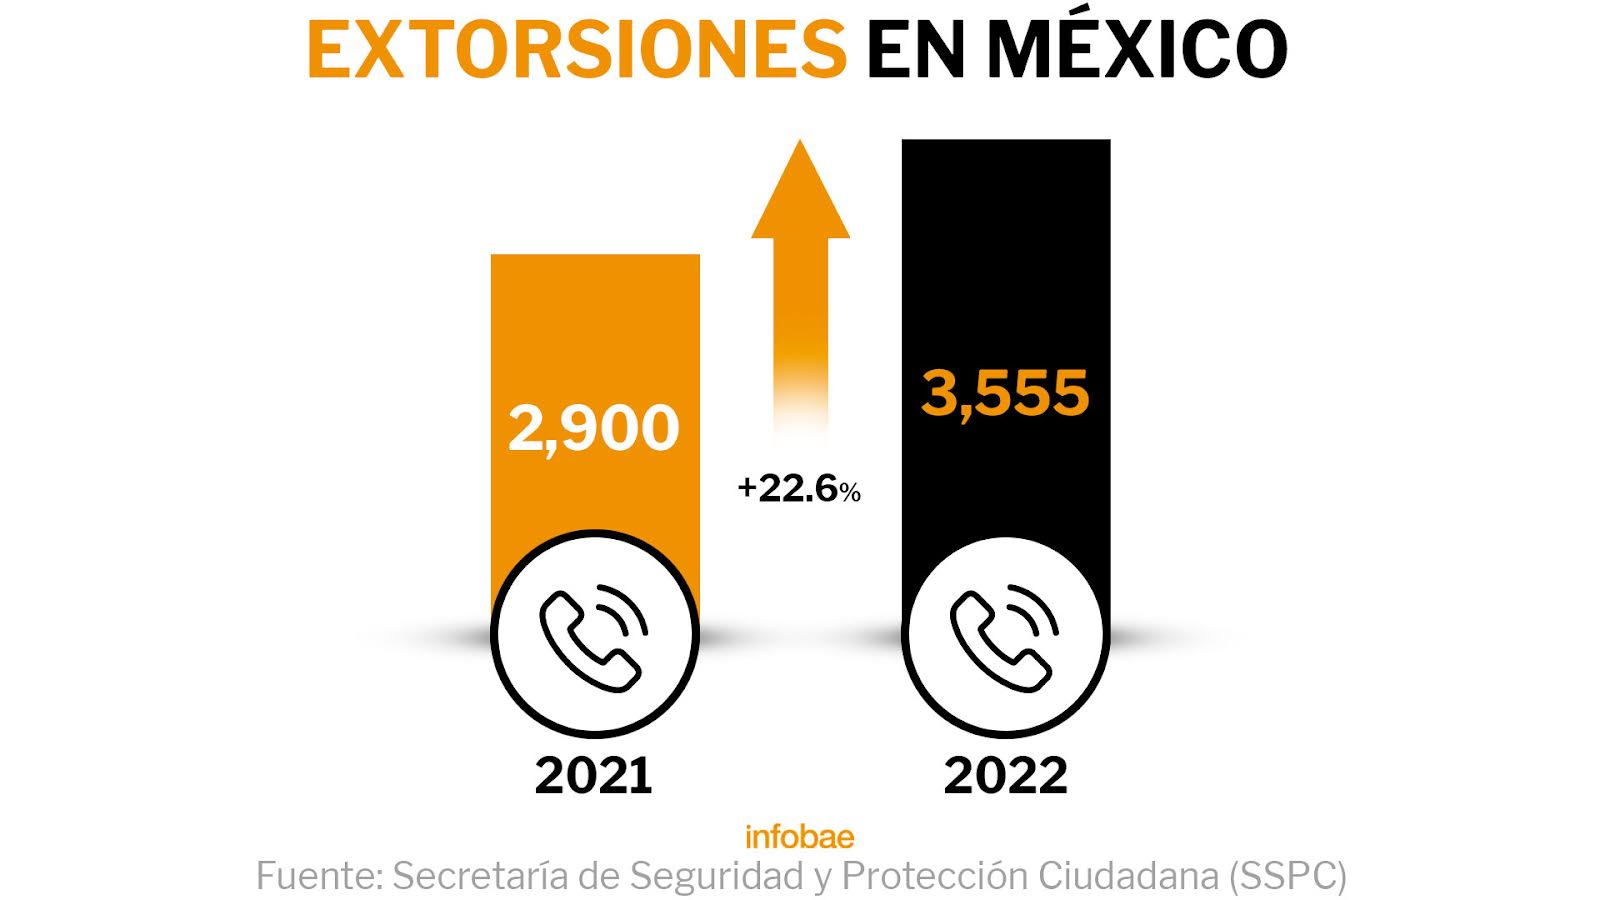 (Infographic: Infobae Mexico)